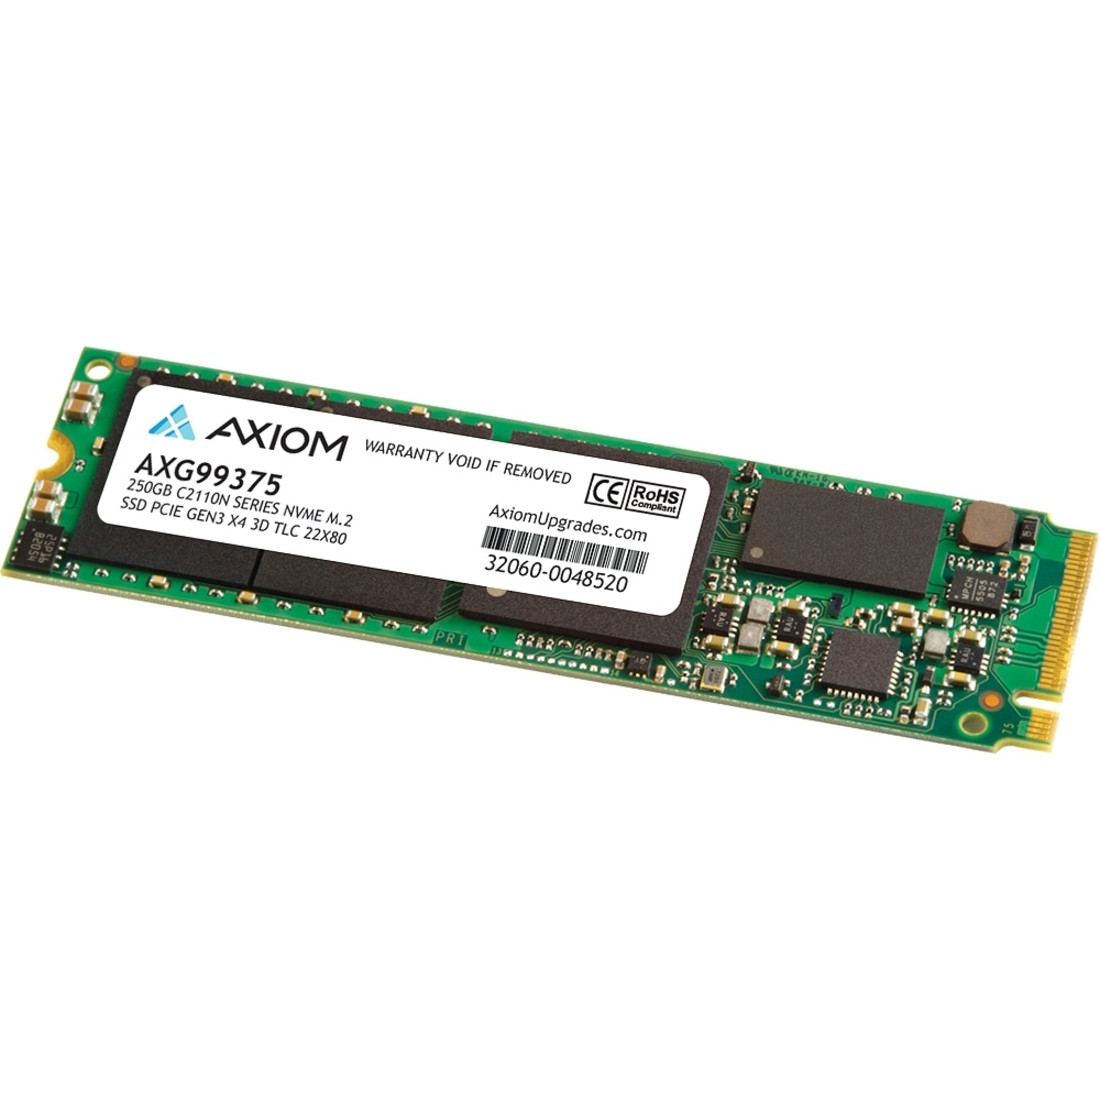 Axiom Memory Solutions 250GB C2110n Series PCIe Gen3x4 NVMe M.2 TLC SSDTAA Compliant0.913 DWPD227 TB TBW2010 MB/s Maximum Read Transfer Rate3 Yea… AXG99375